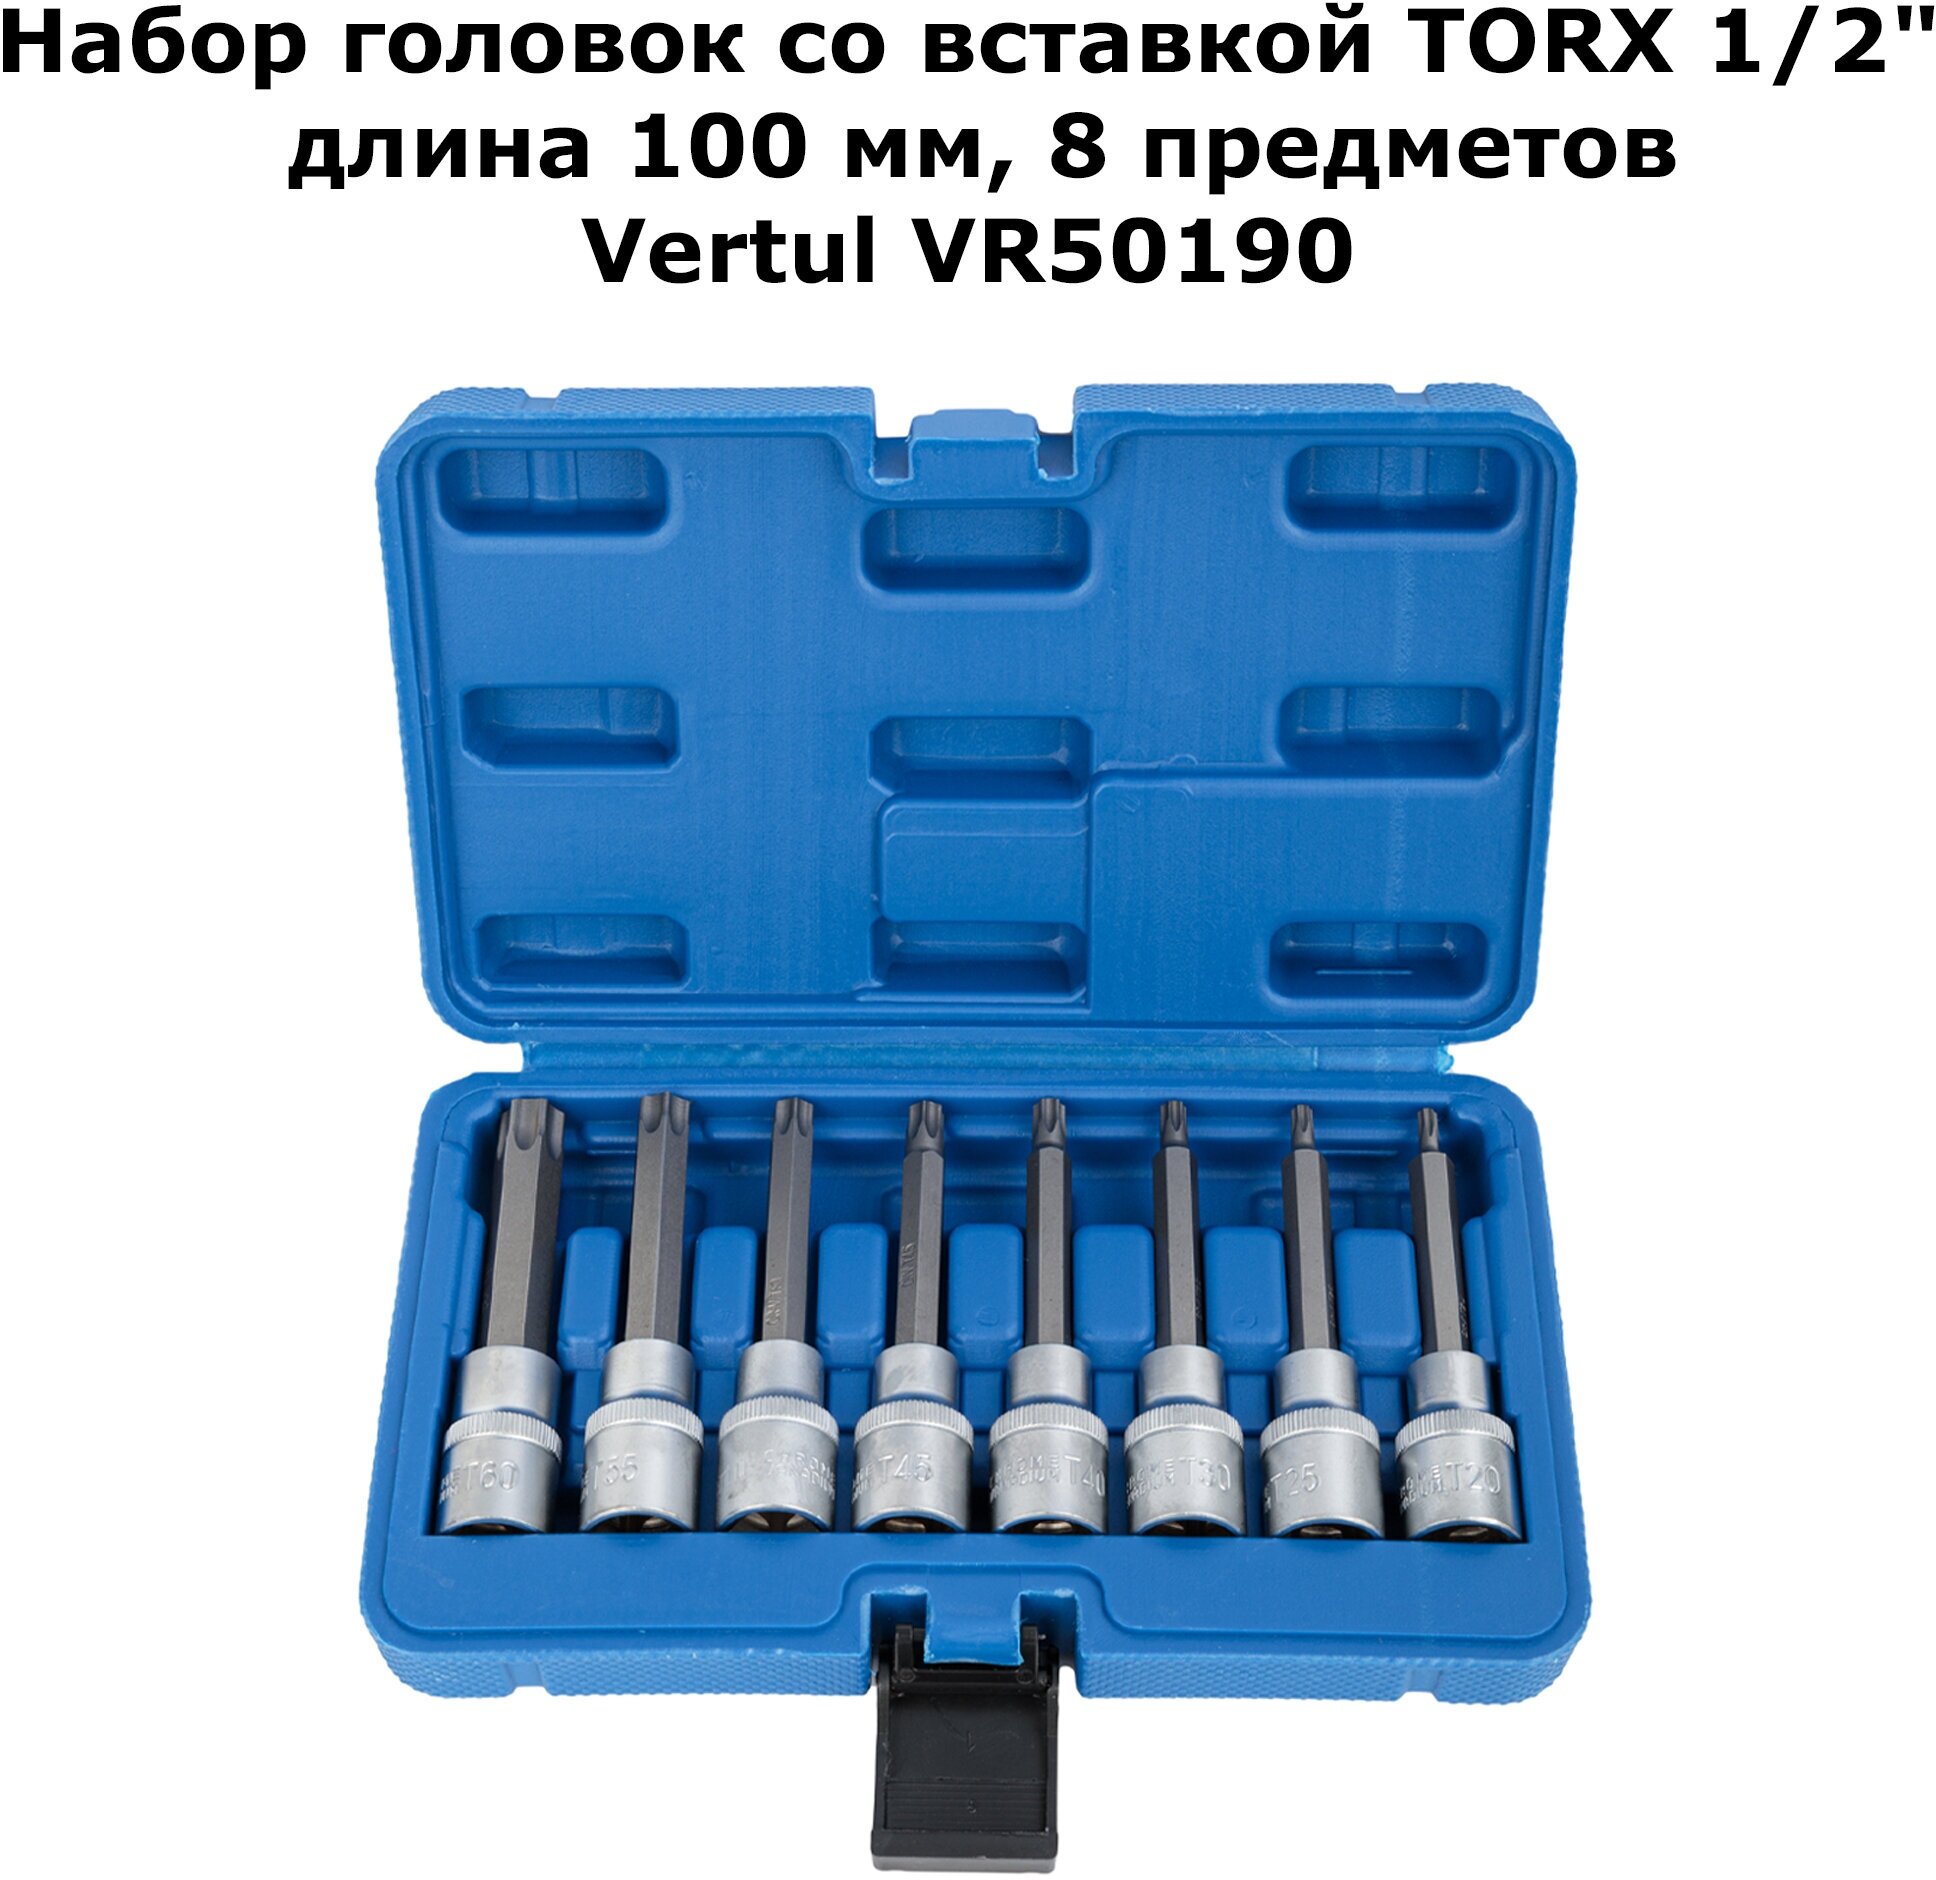 Набор головок со вставкой TORX 1/2" 100 мм 8 предметов VR50190